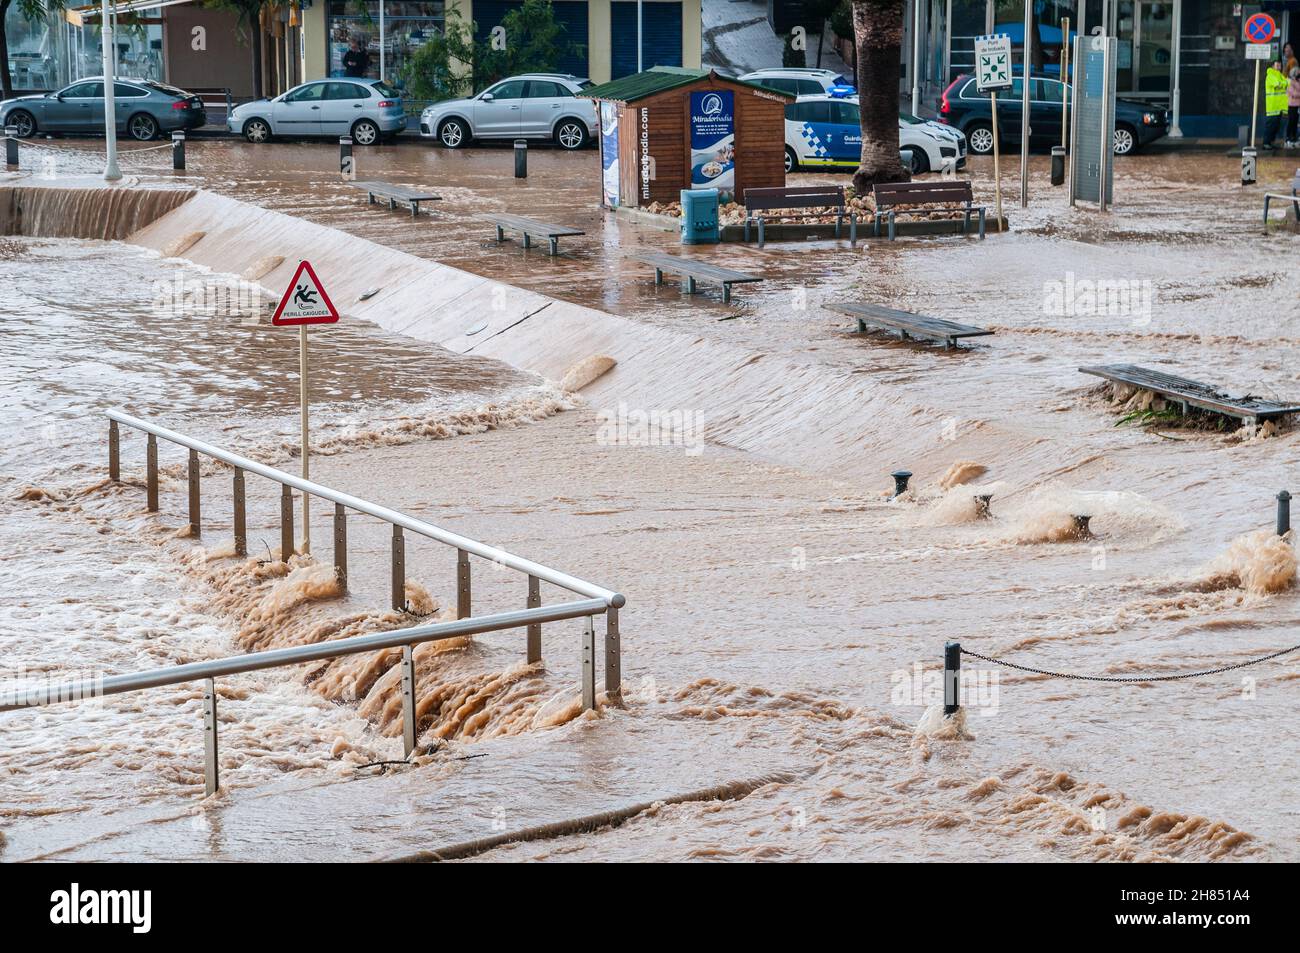 sever floods in city of L'ampolla, novembre 2021, Catalonia, Spain Stock Photo